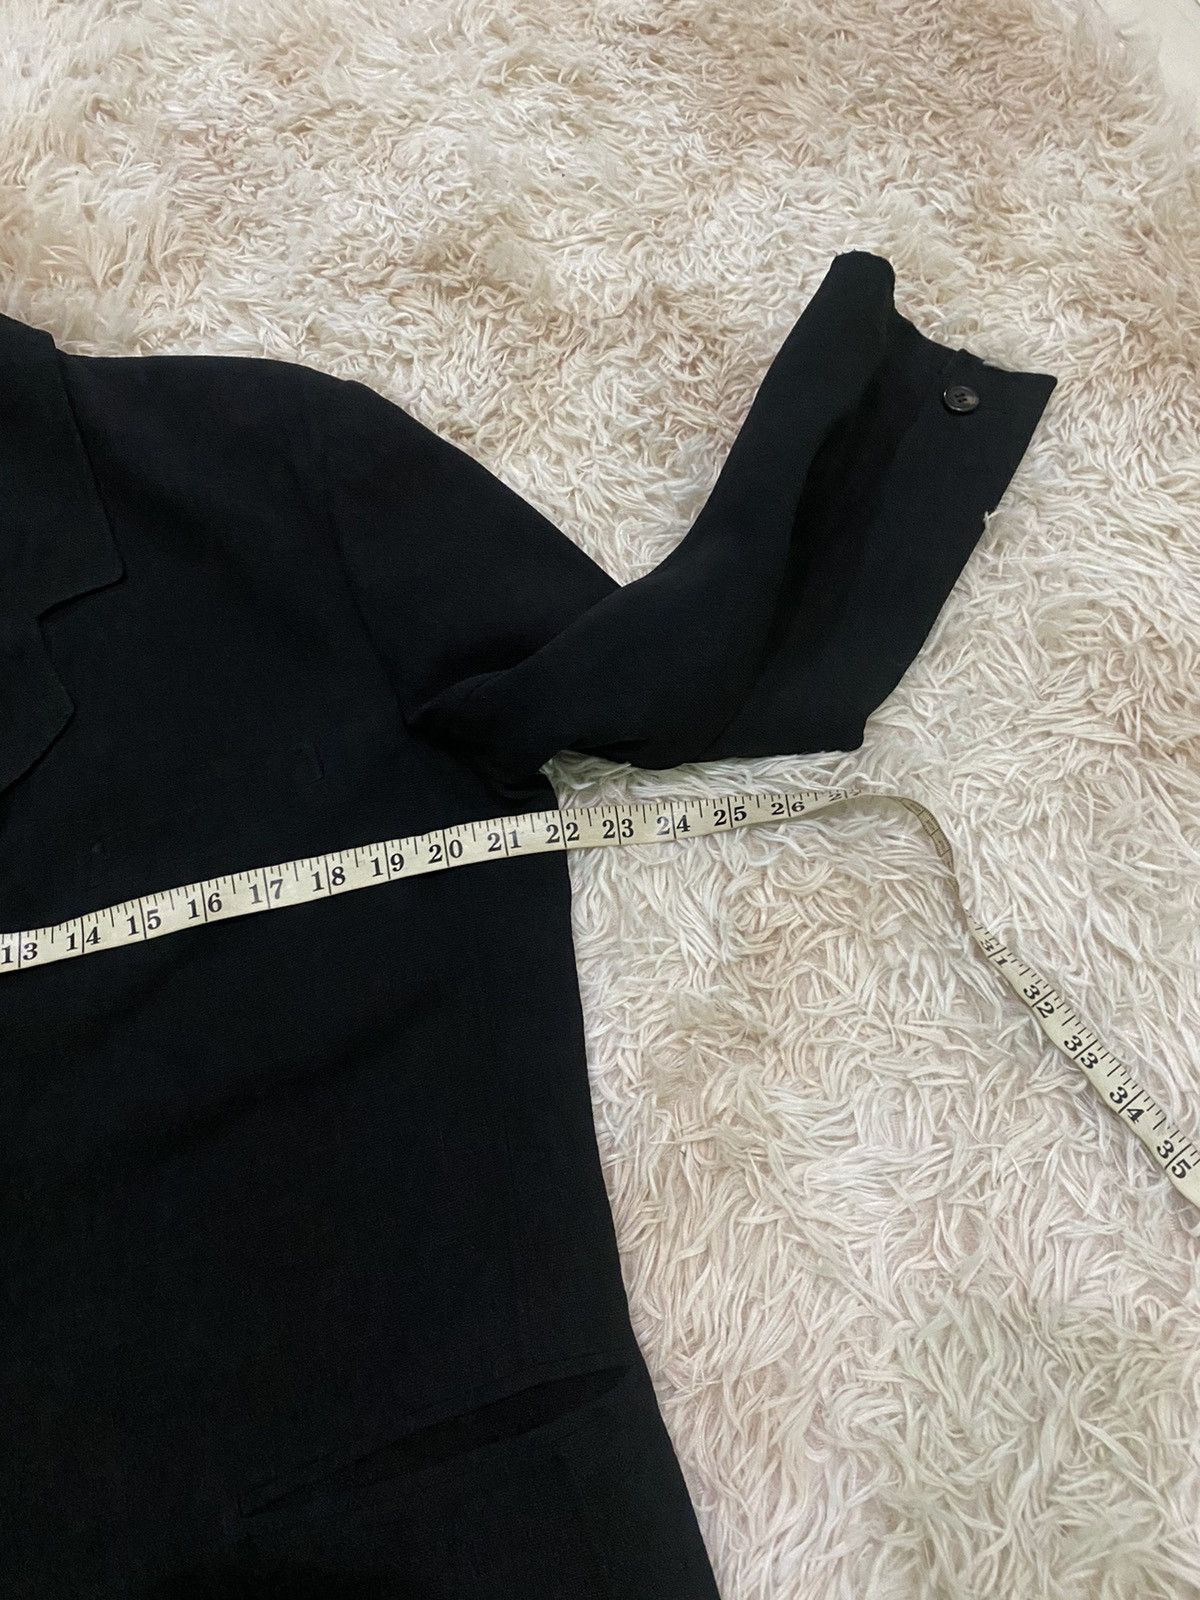 Vintage Issey Miyake Wool/Linen Jacket Blazer - 8